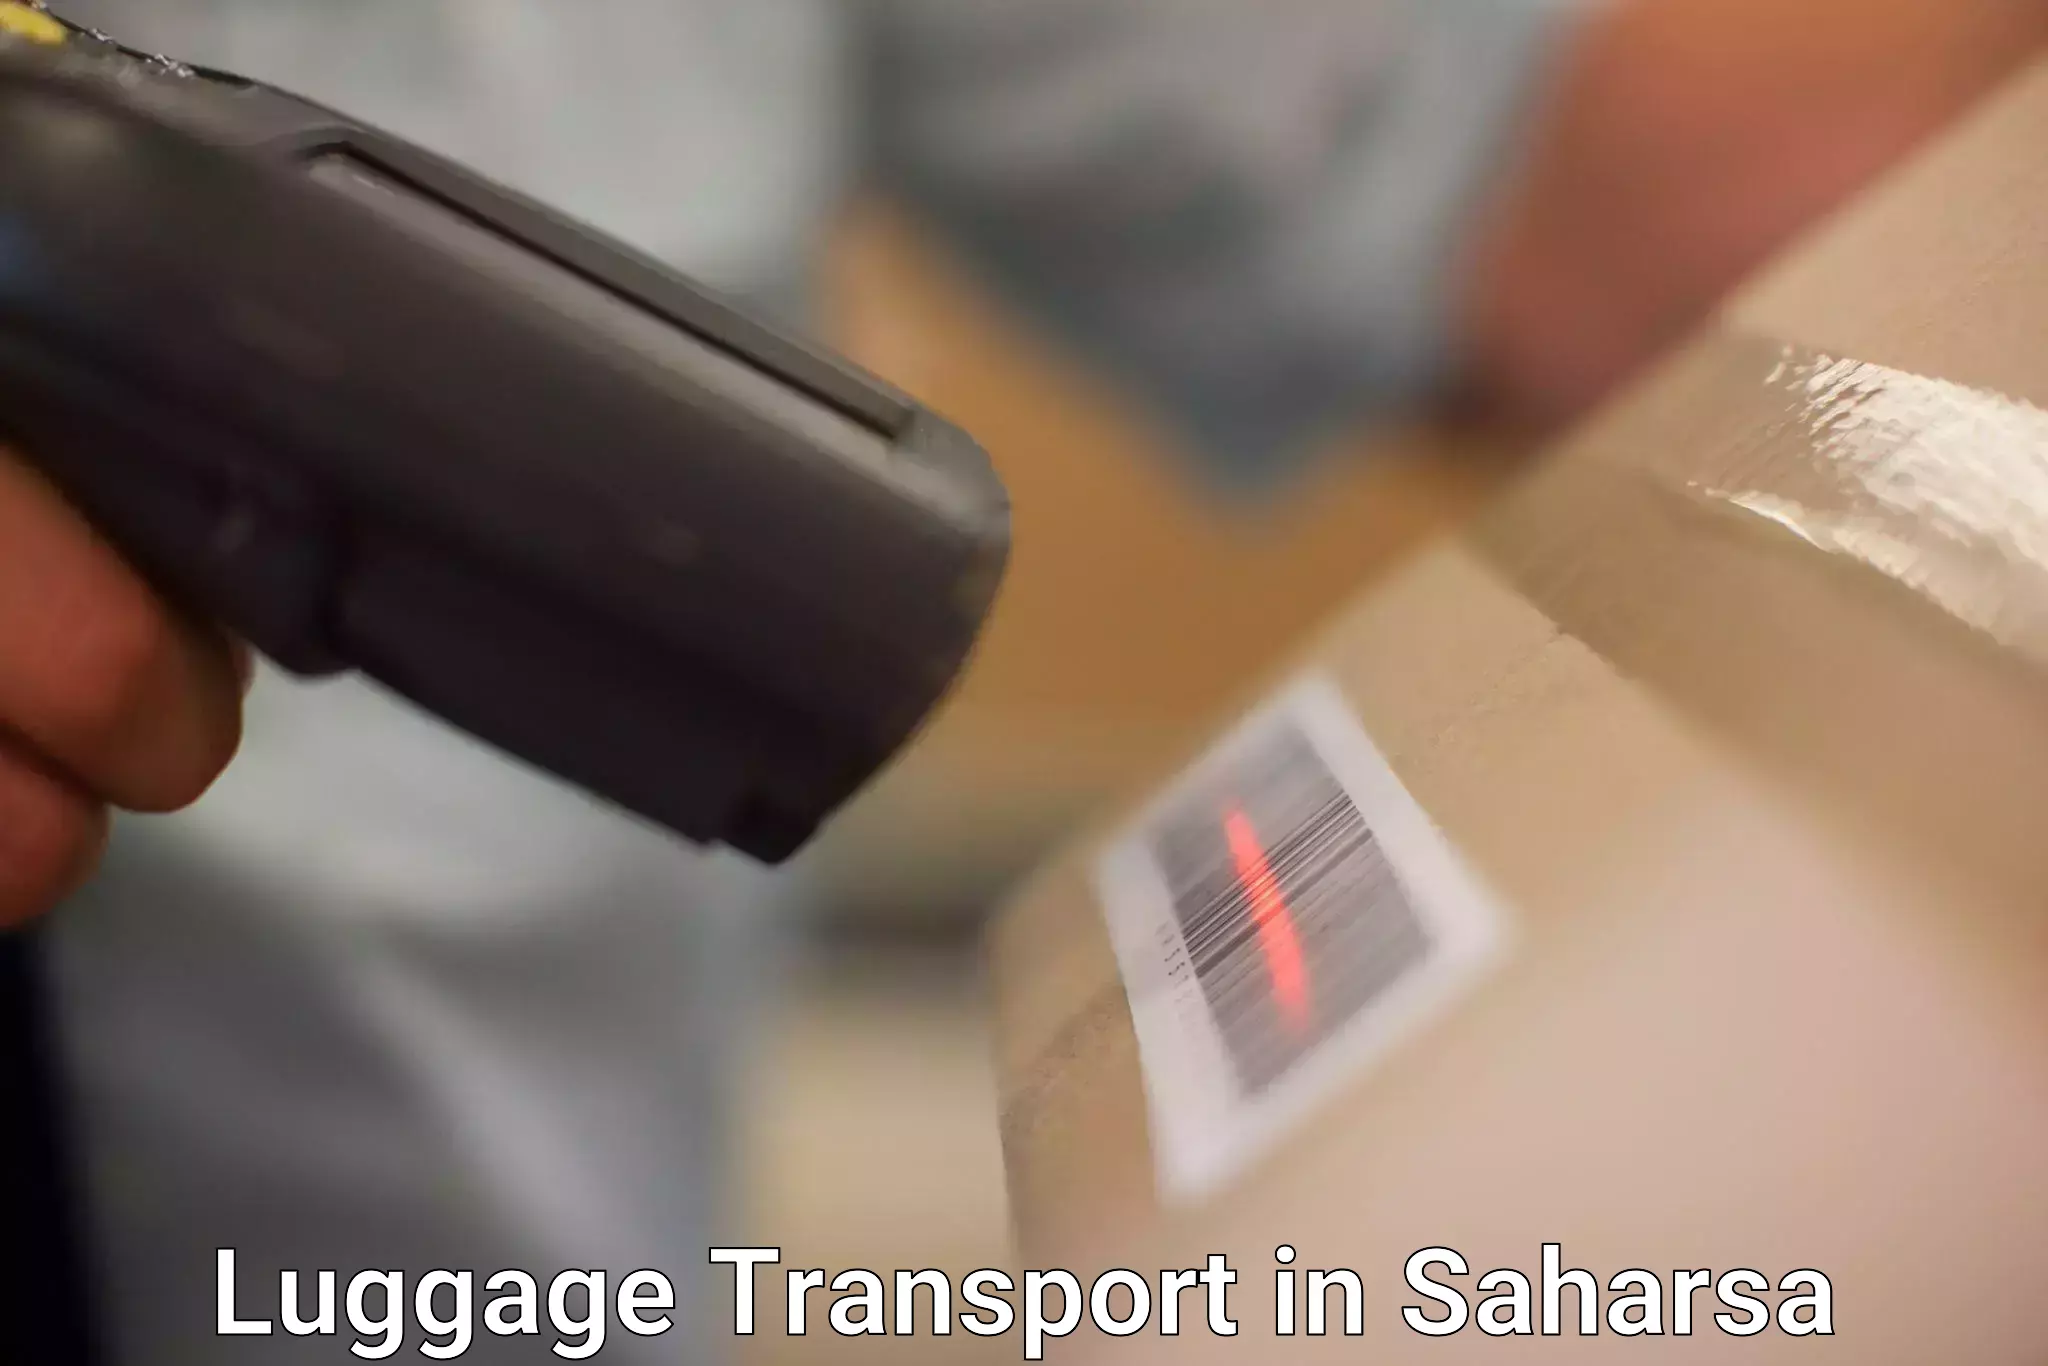 Luggage transport deals in Saharsa